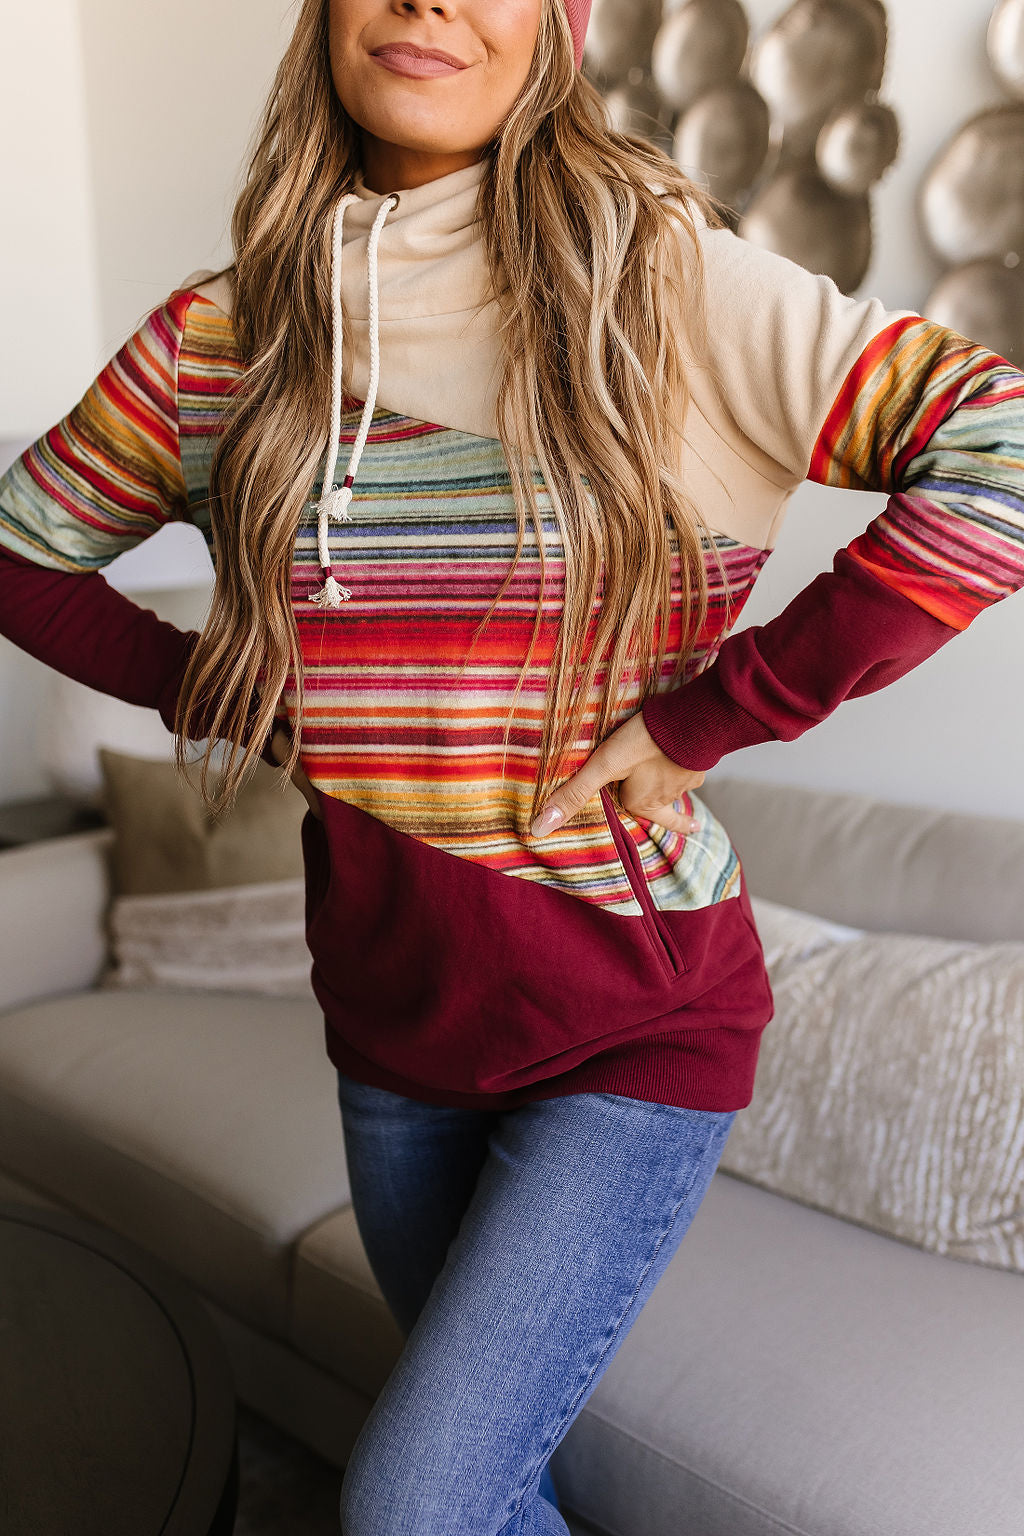 Singlehood Sweatshirt - Prickly Pear - Mindy Mae's Marketcomfy cute hoodies